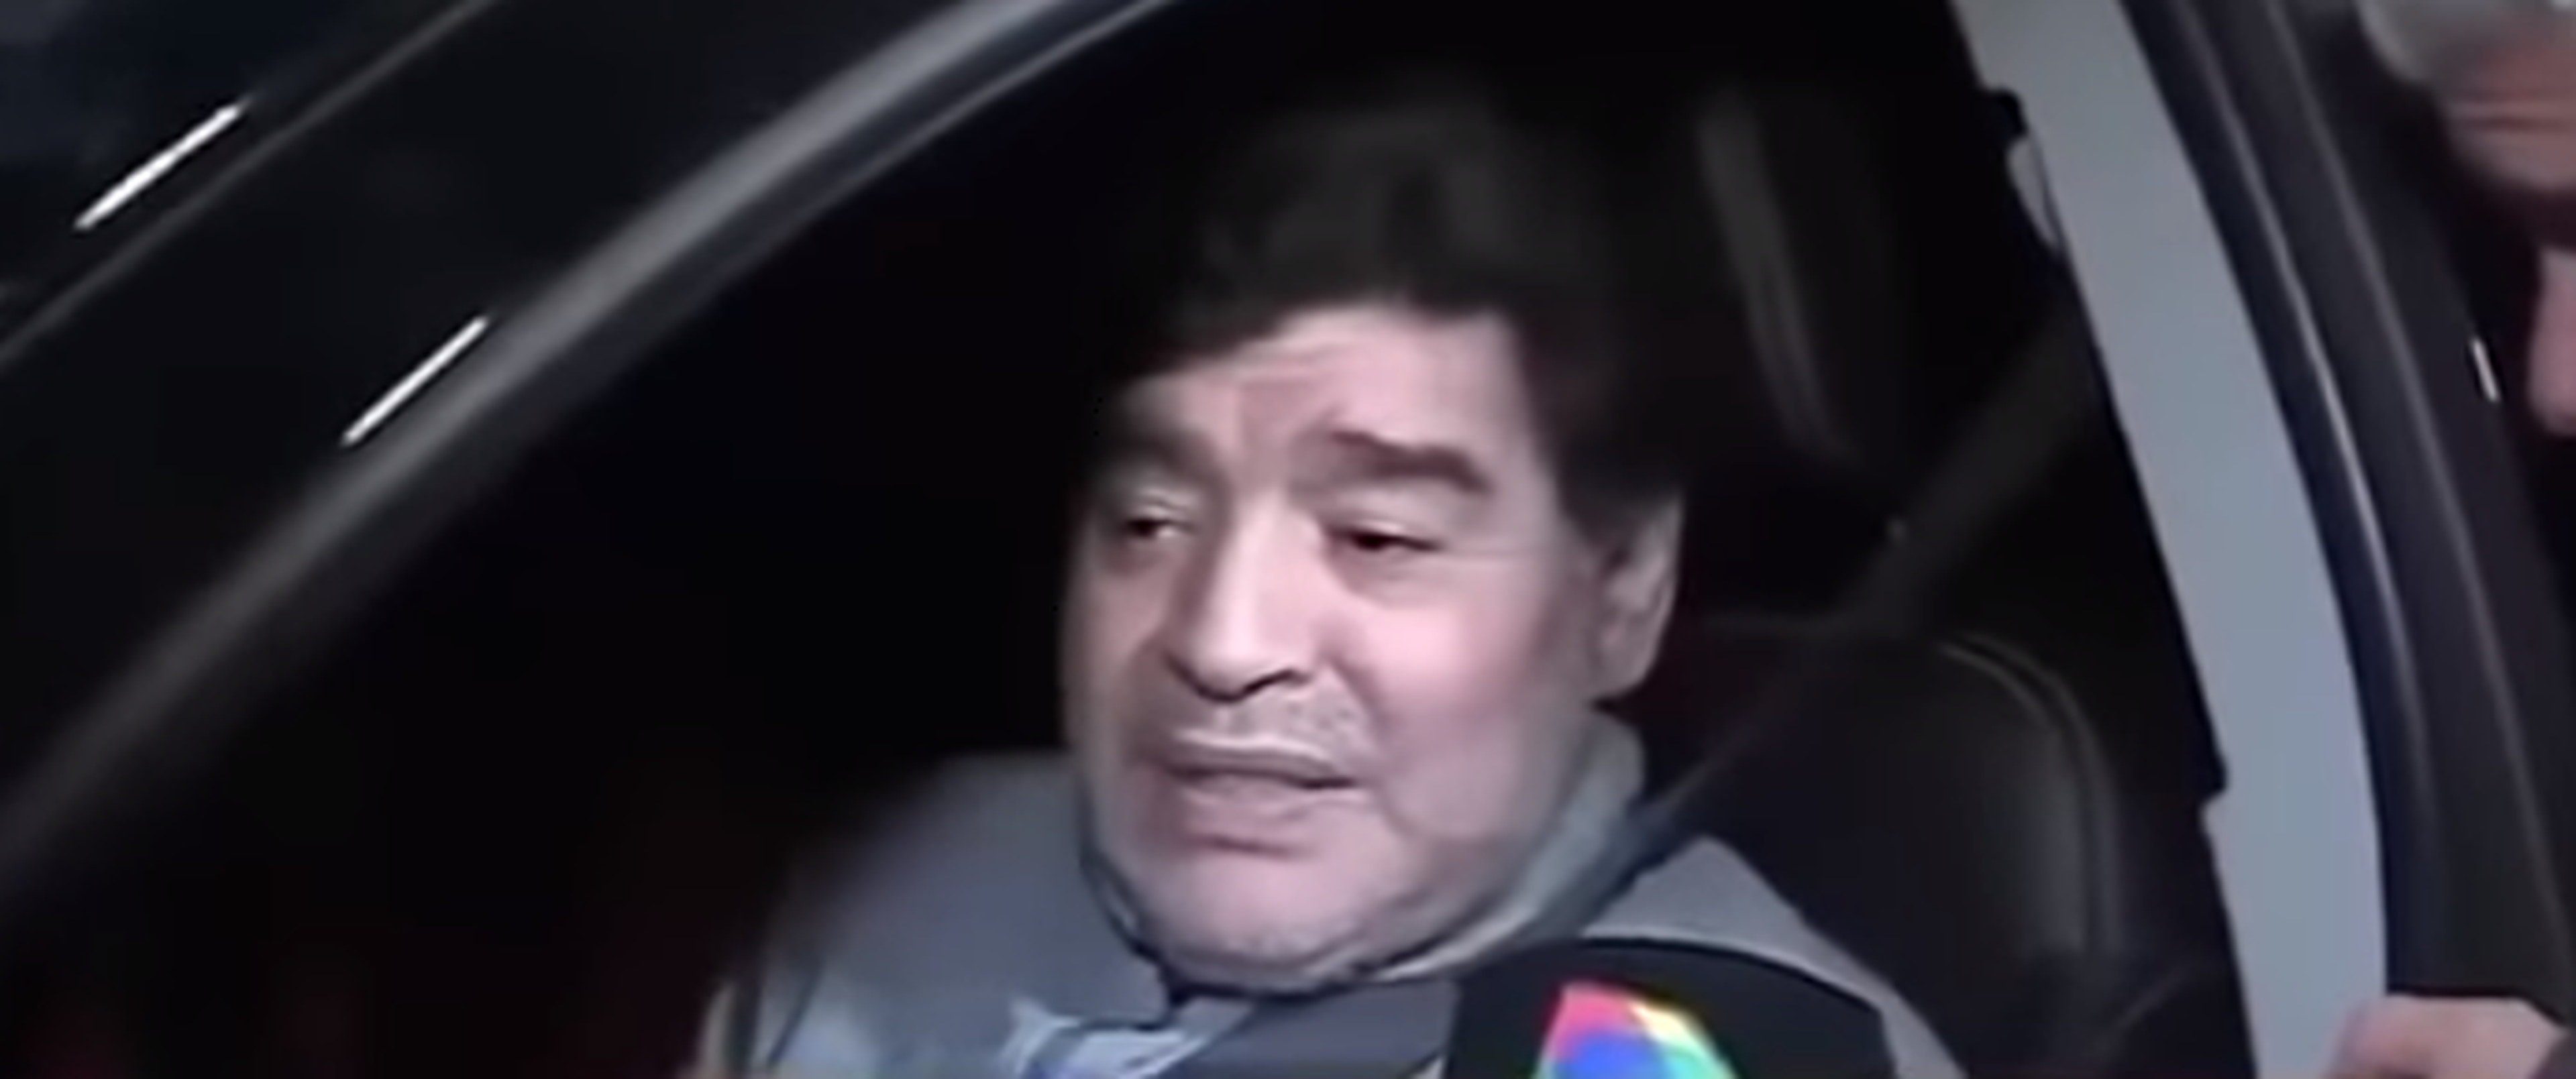 VÍDEO: Maradona conduce en estado de embriaguez